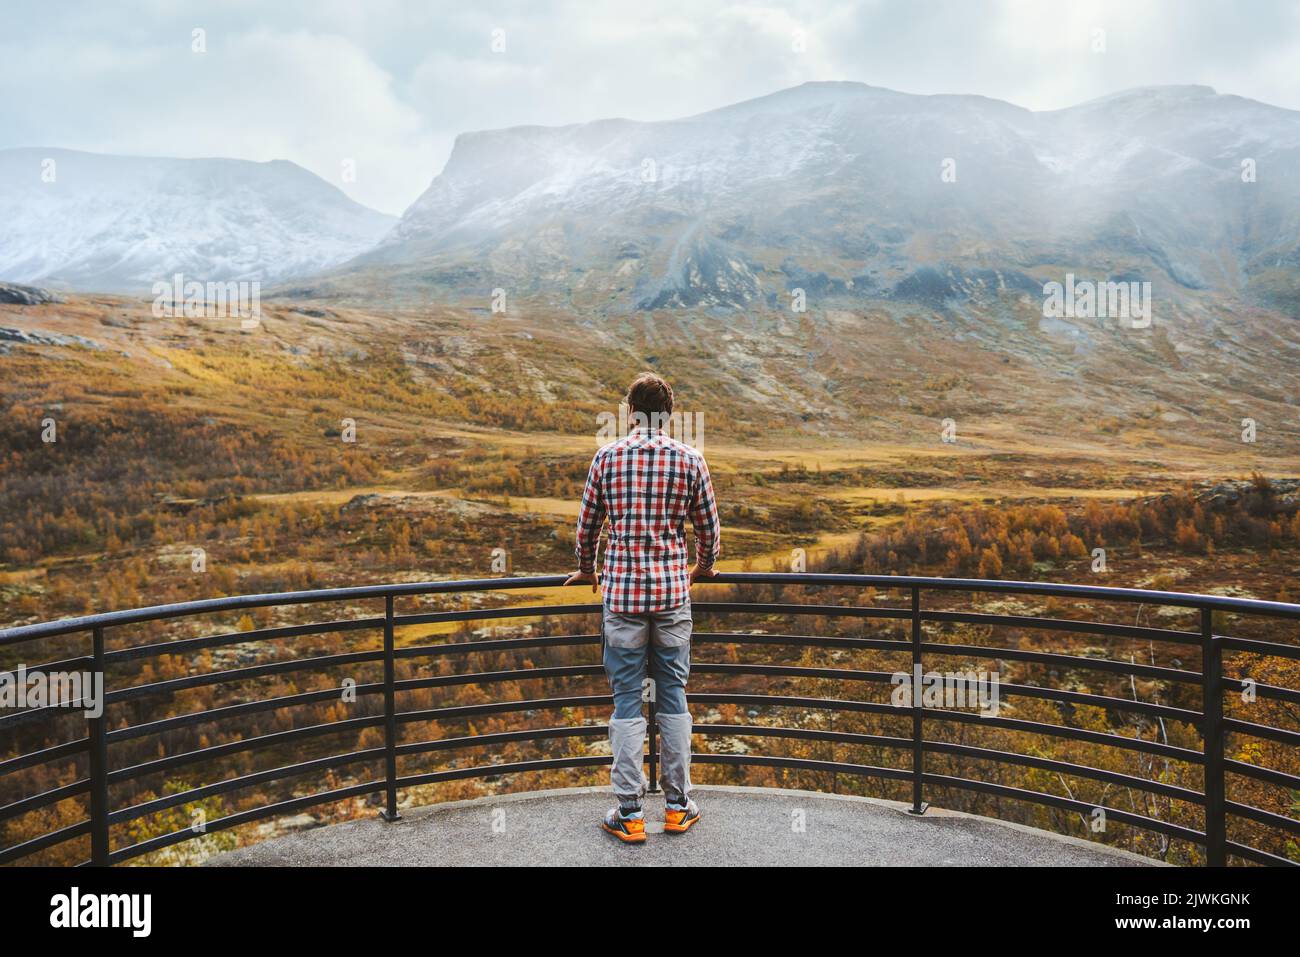 Tourist Mann Wandern in Norwegen Reise Abenteuer Outdoor Berge anzeigen aktiv gesund Lebensstil skandinavische Natur Herbstsaison Vegaskjelet Aussichtspunkt Stockfoto